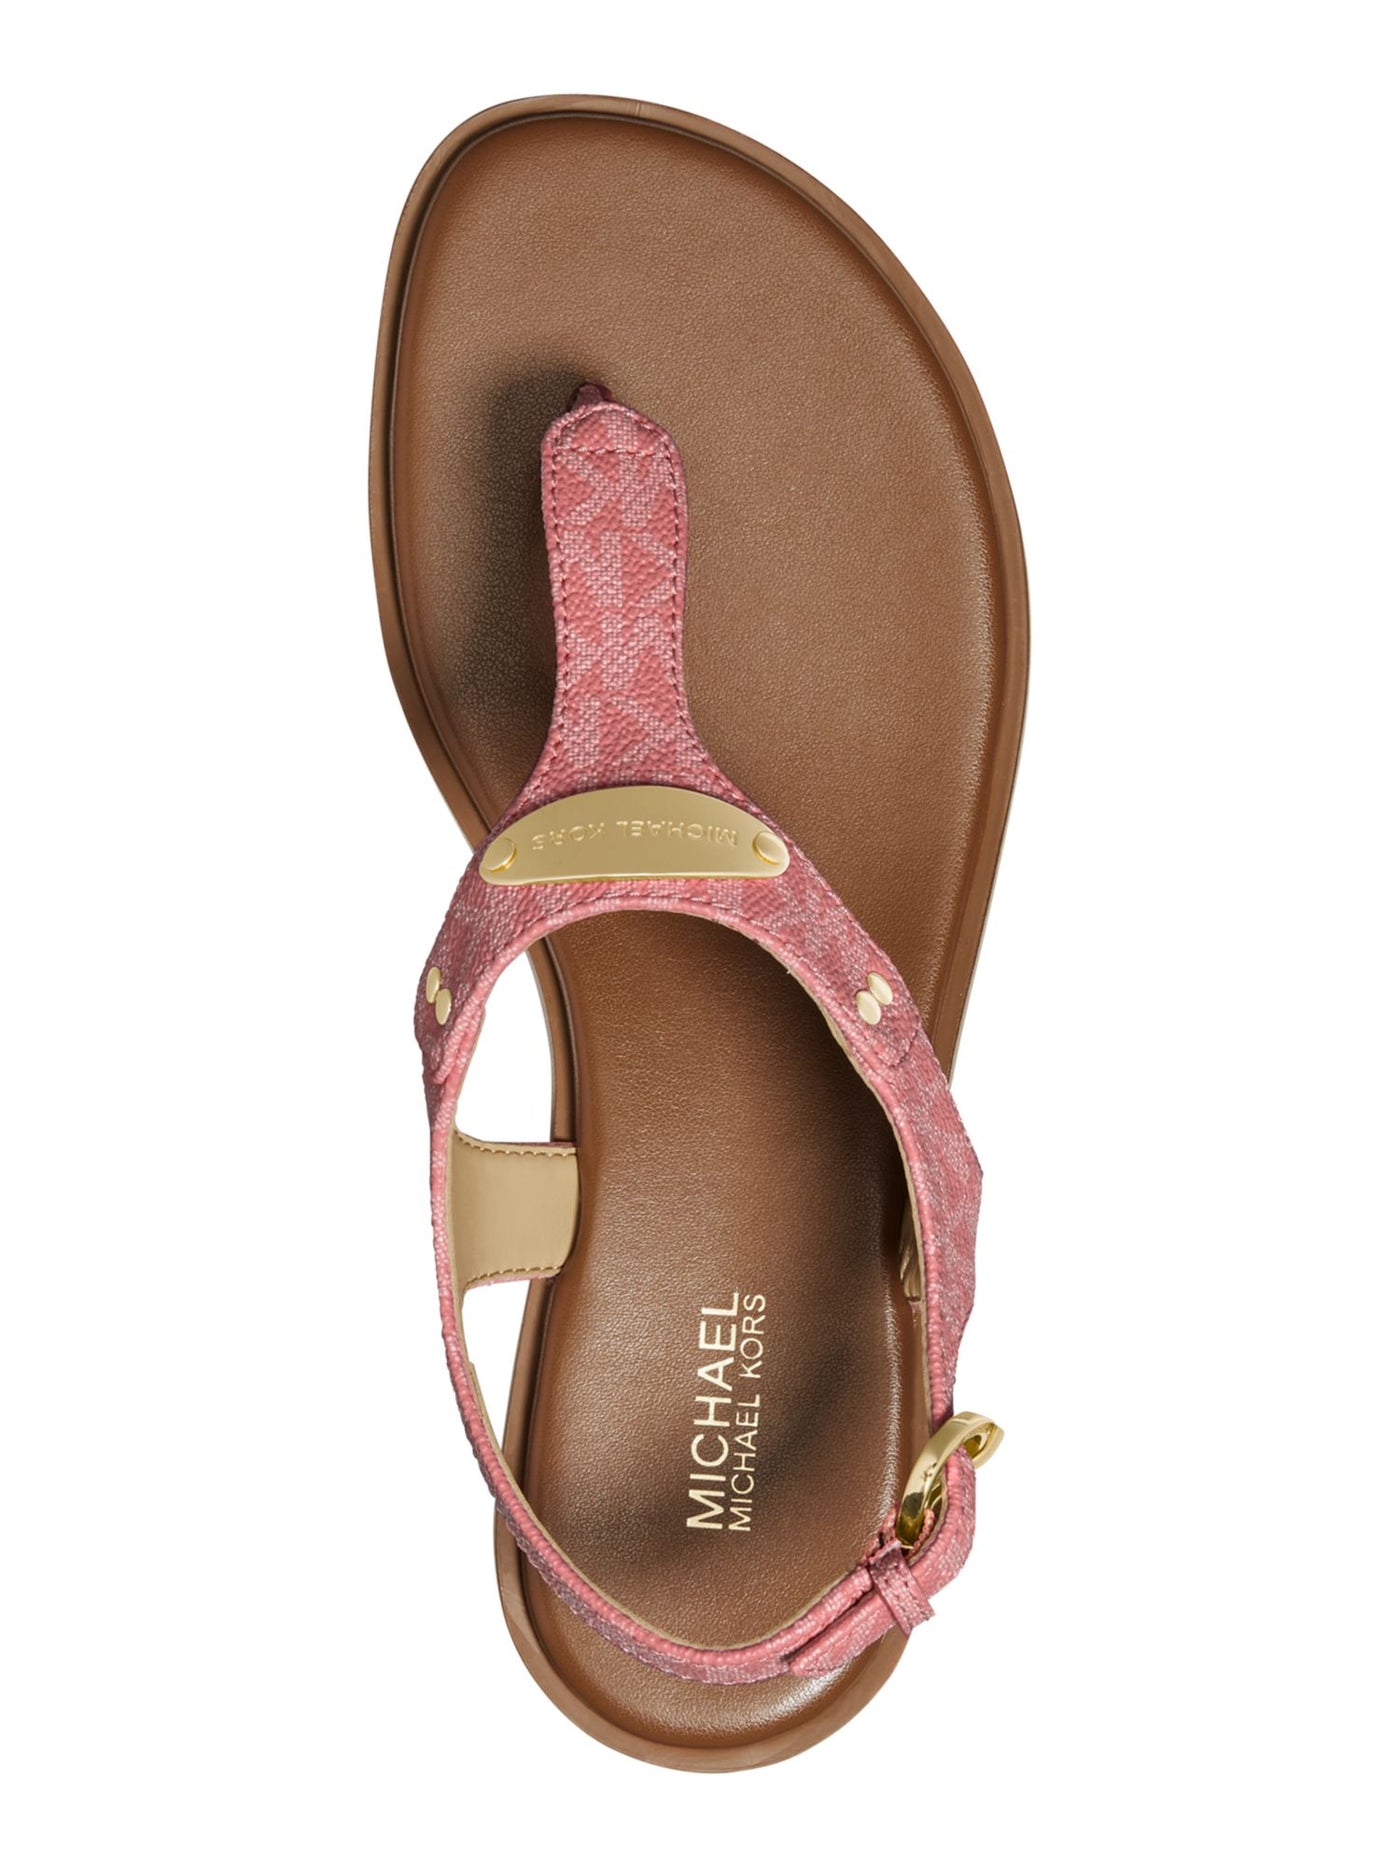 MICHAEL KORS Womens Coral Metallic Plate Hardware Detail Tea Rose Round Toe Buckle Thong Sandals Shoes 7.5 M